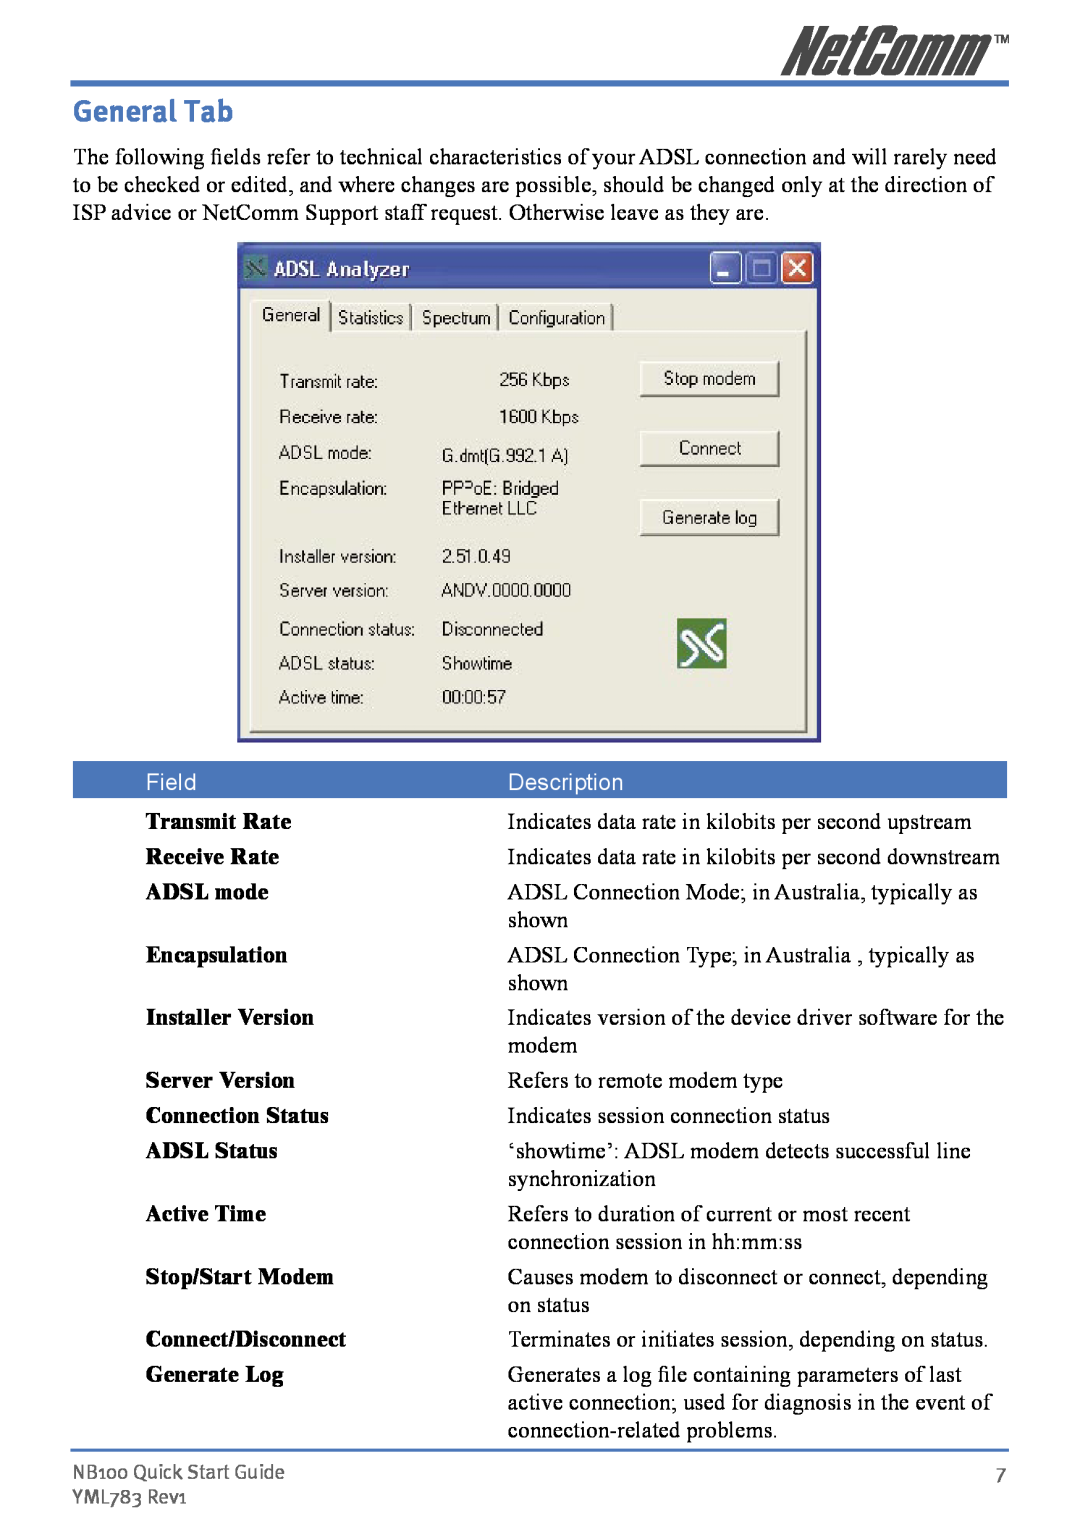 NetComm NB100 manual General Tab, Field, Description 